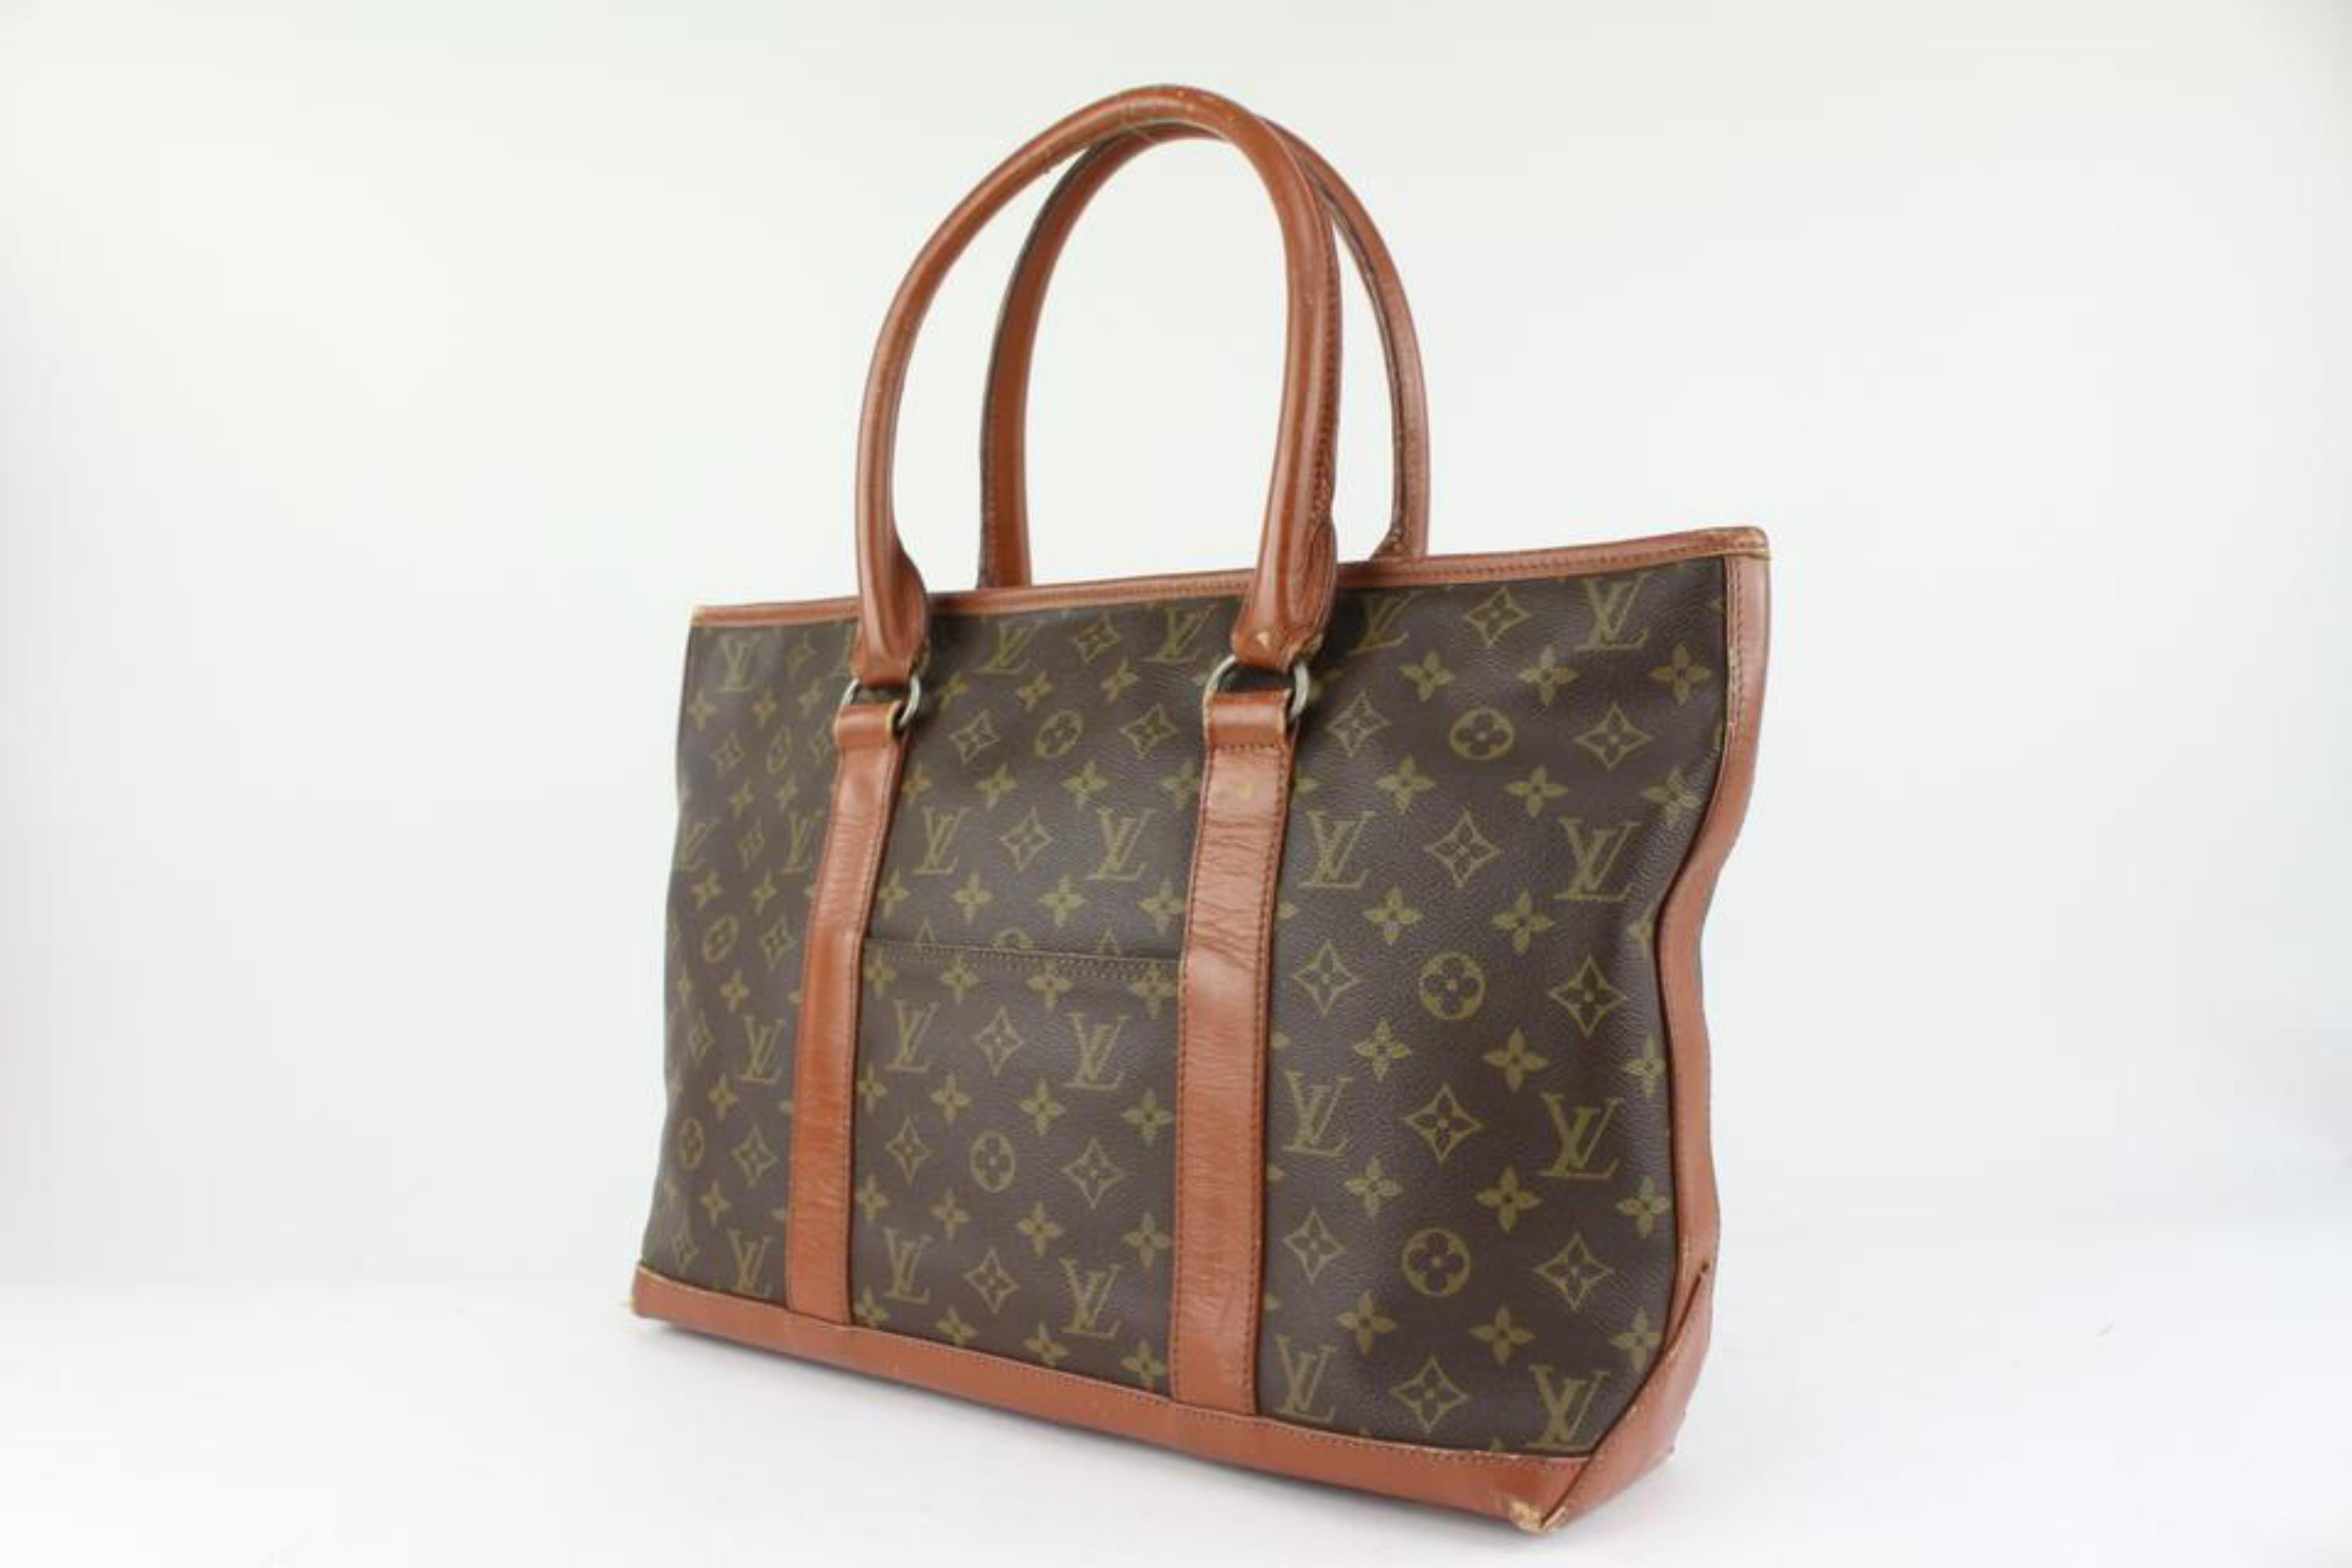 Louis Vuitton Monogram Sac Weekend PM Zip Tote bag 1119lv50
Date Code/Serial Number: 842
Made In: France
Measurements: Length:  18